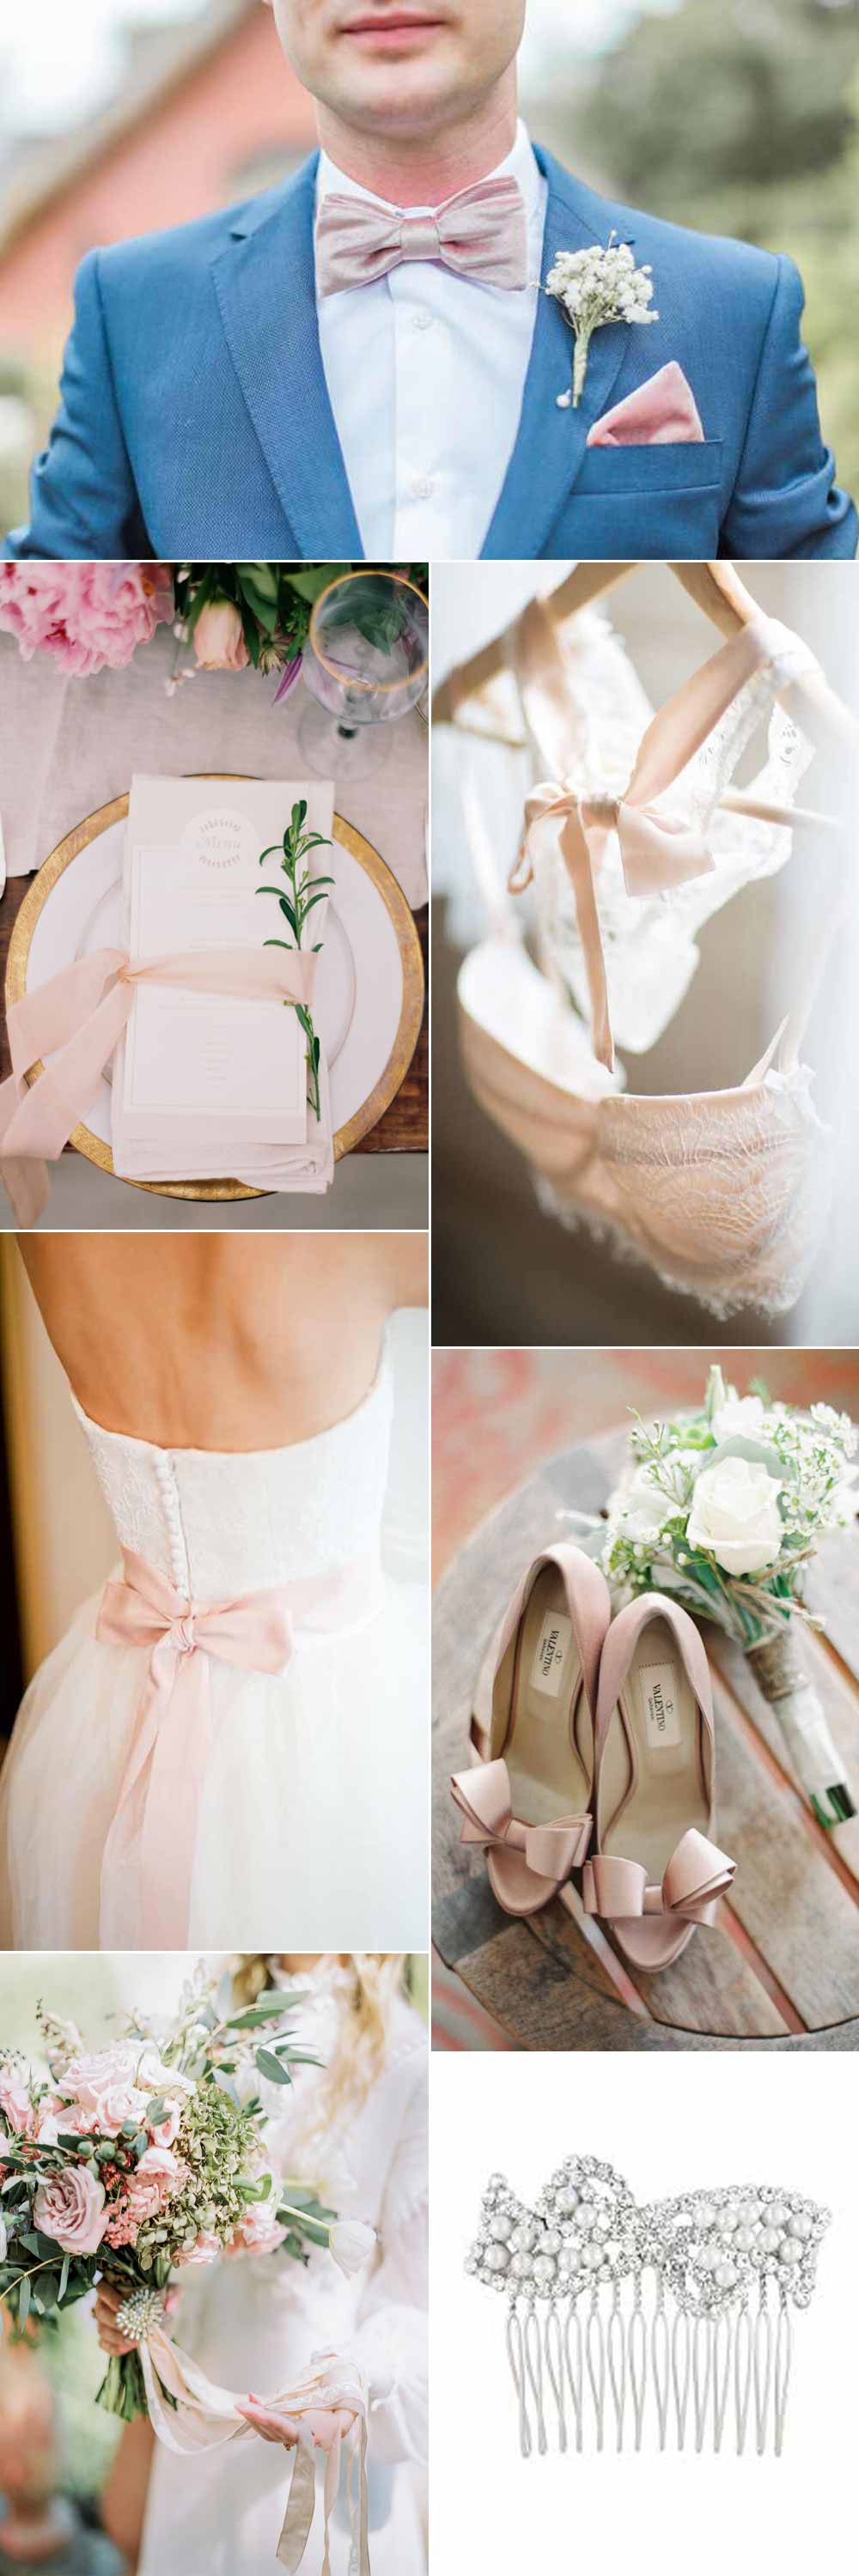 Blush and bow wedding inspiration